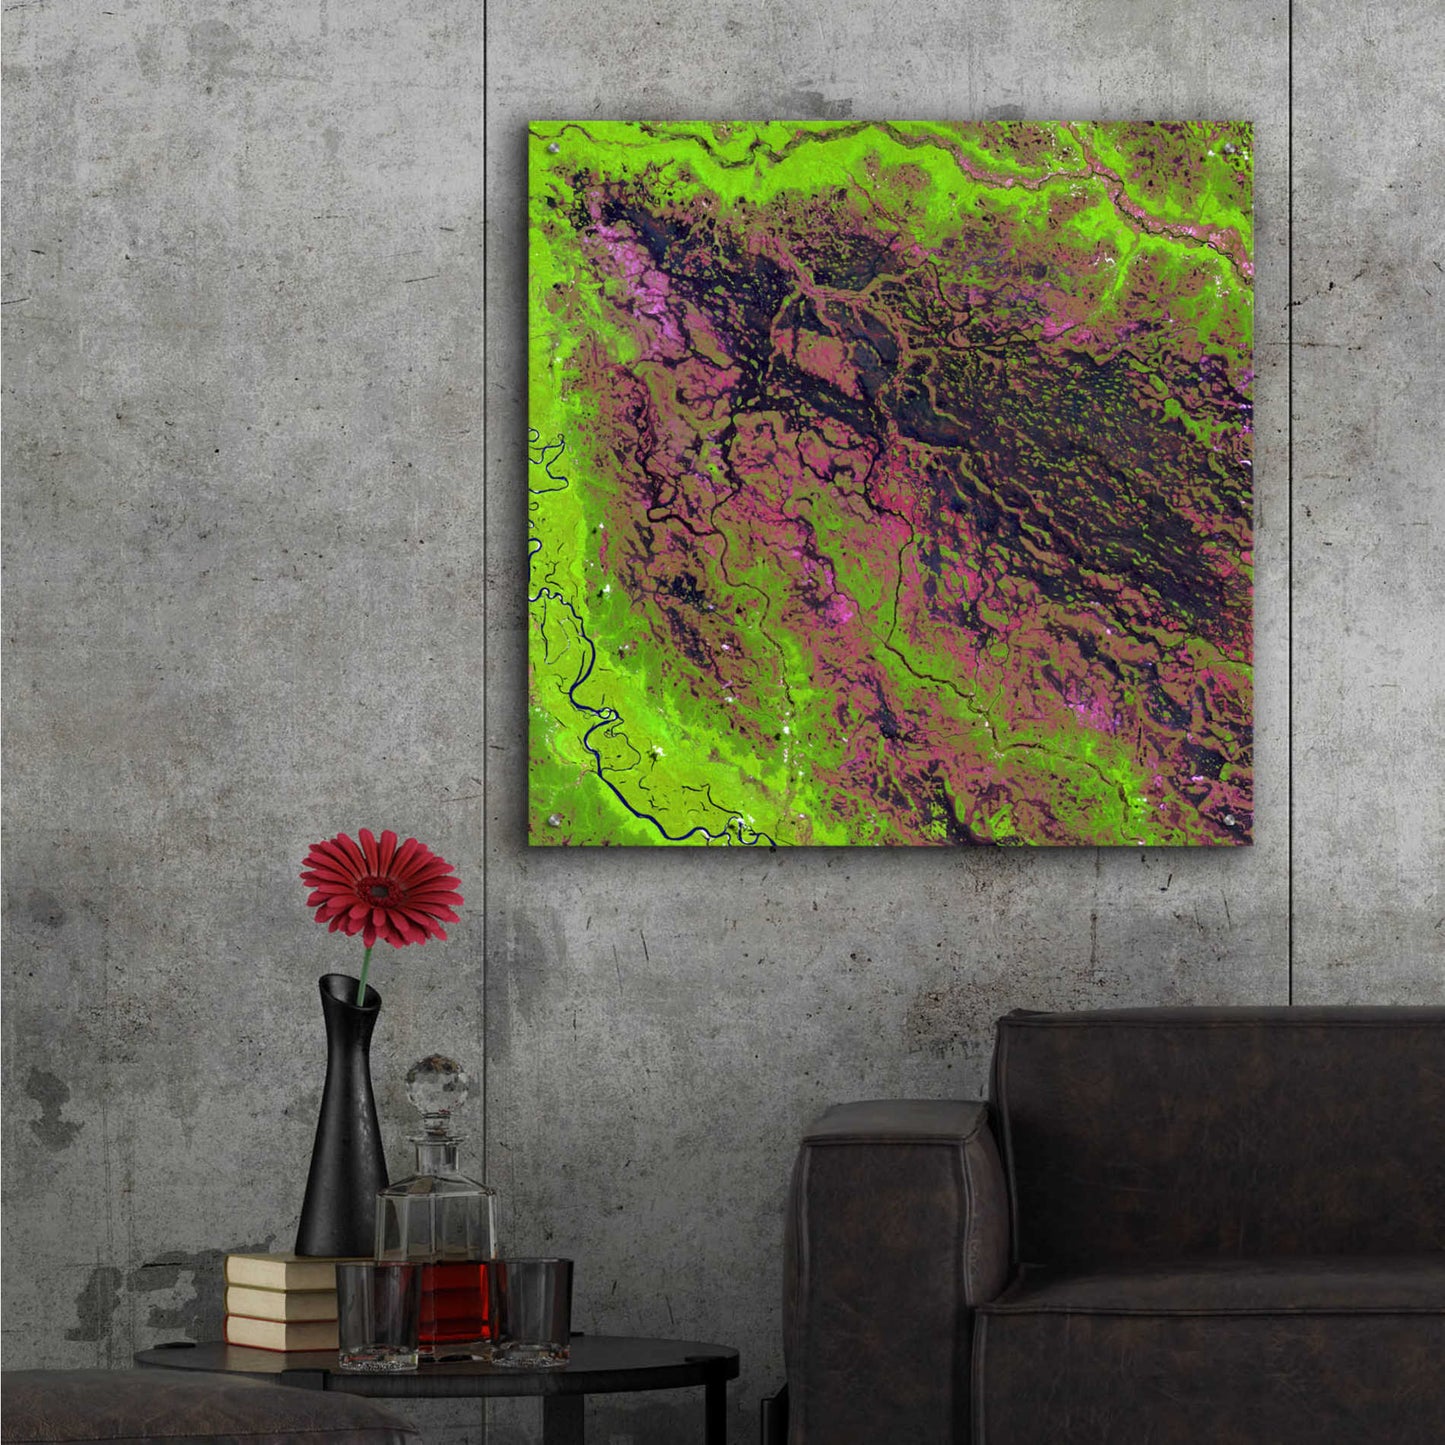 Epic Art 'Earth as Art: Demini River' Acrylic Glass Wall Art,36x36